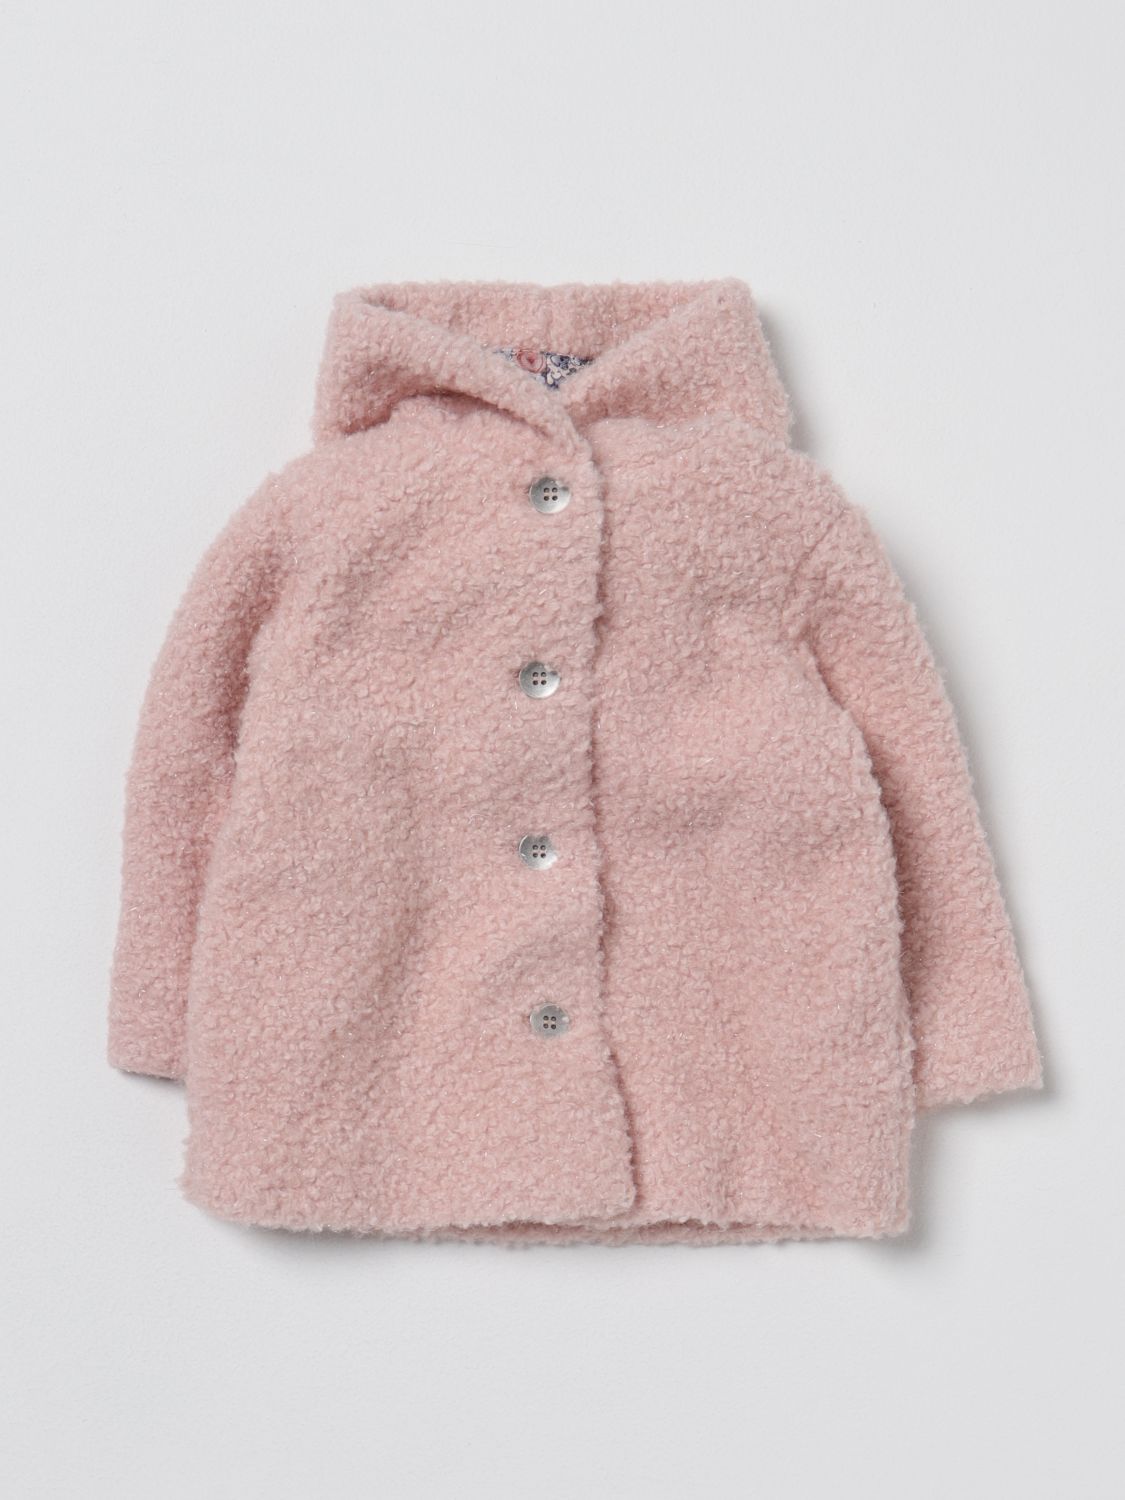 Caffe' D'orzo Babies' Coats  Kids Color Pink